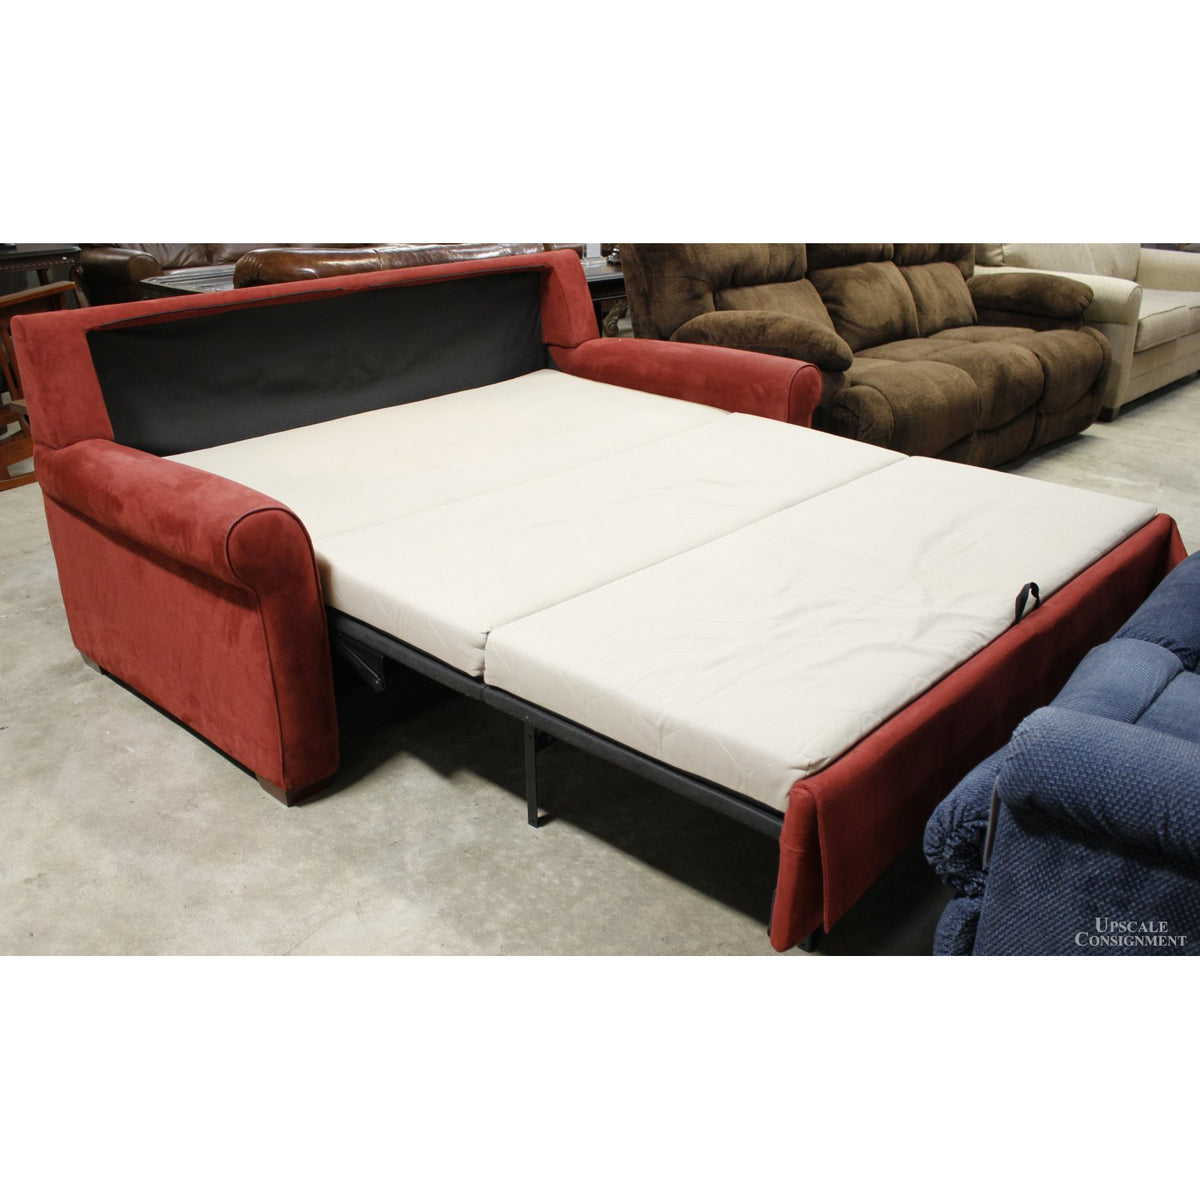 American Leather Queen Microfiber Sleeper Sofa